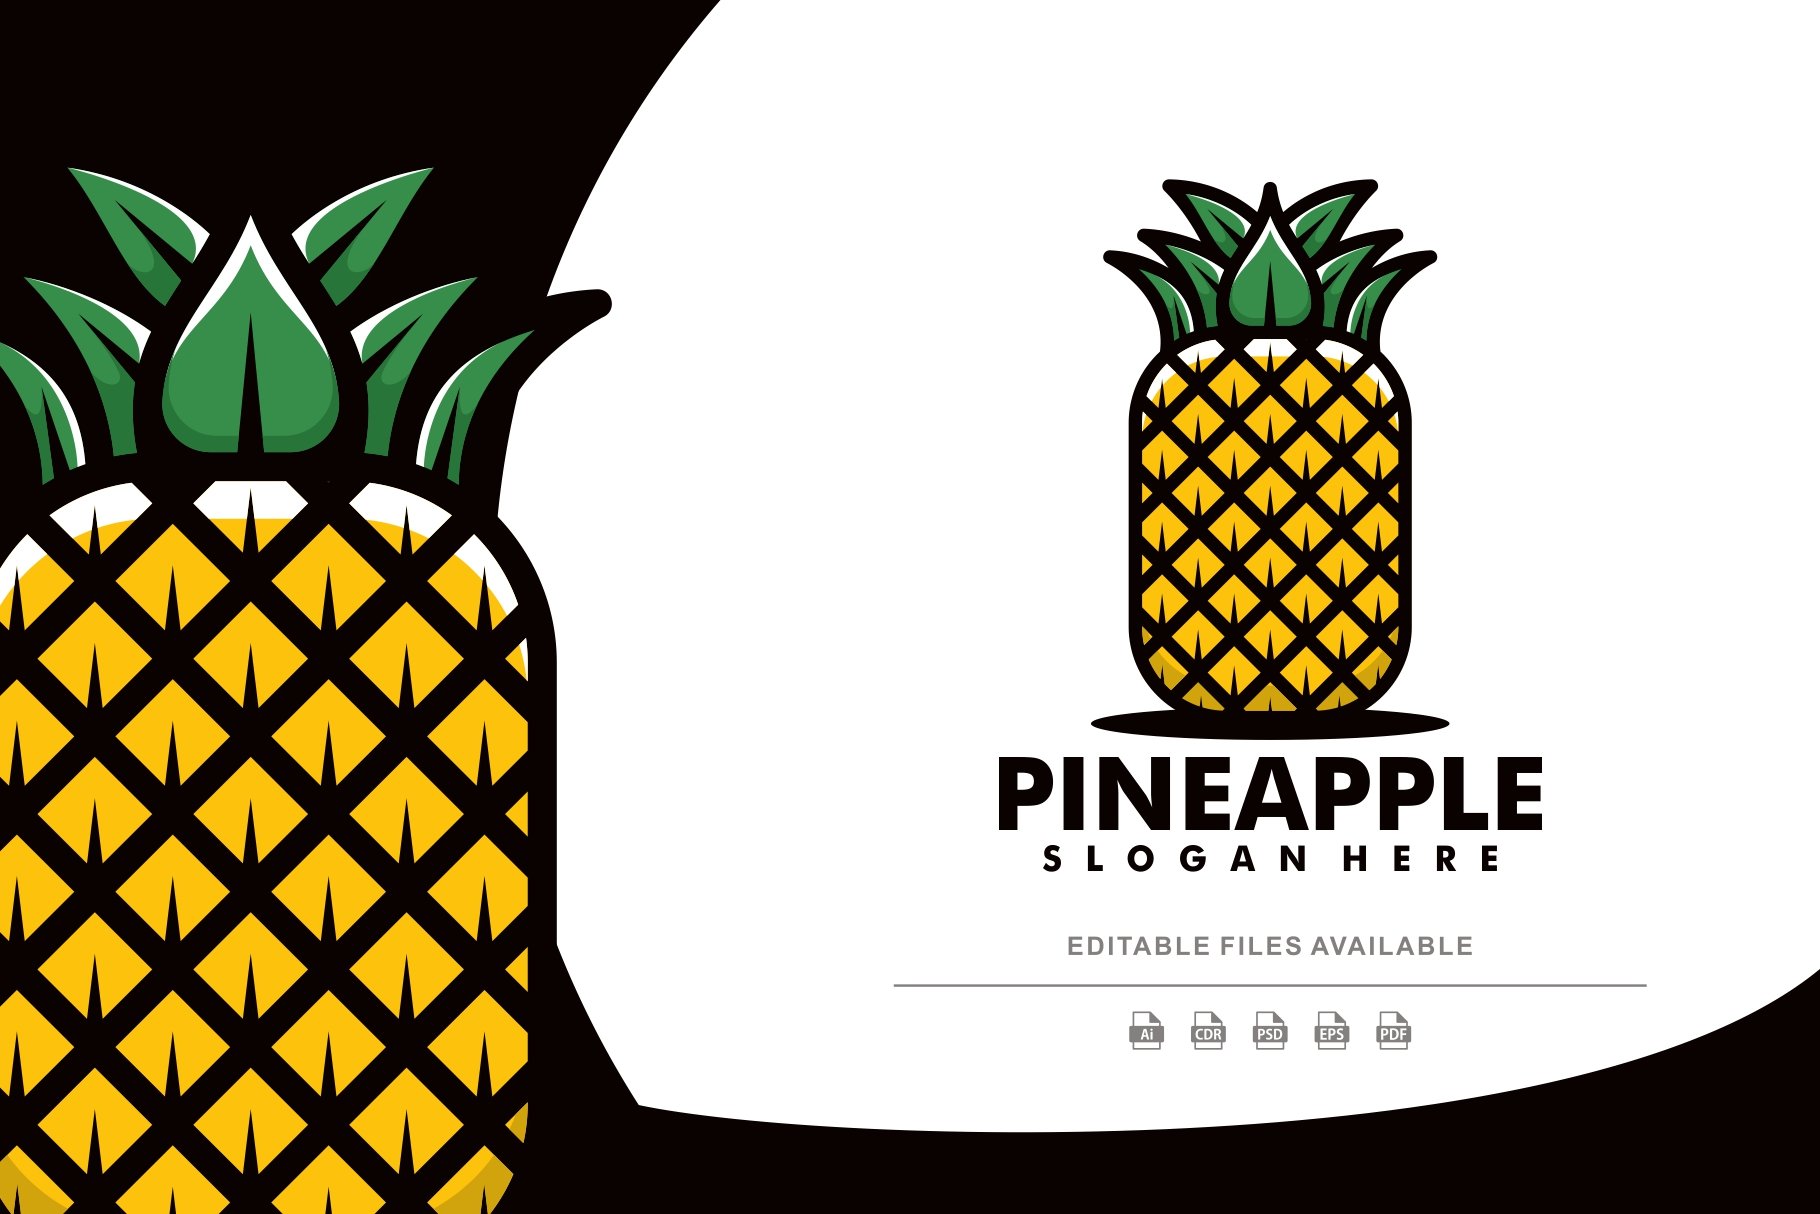 Pineapple Simple Mascot Logo cover image.